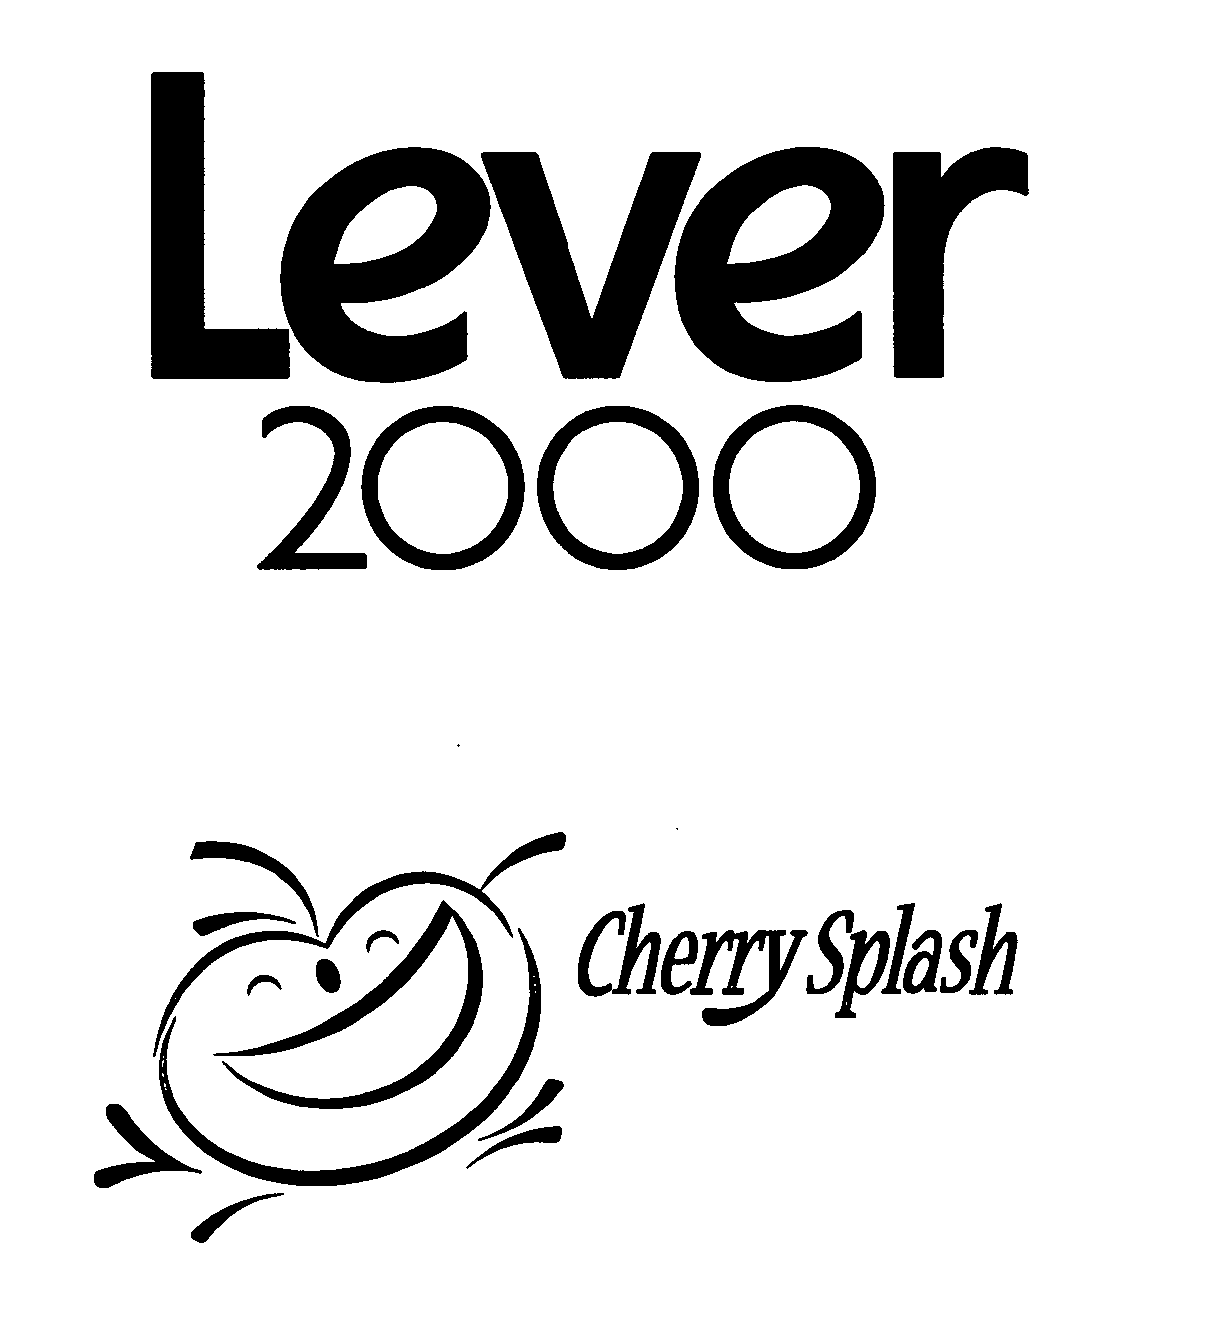  LEVER 2000 CHERRY SPLASH